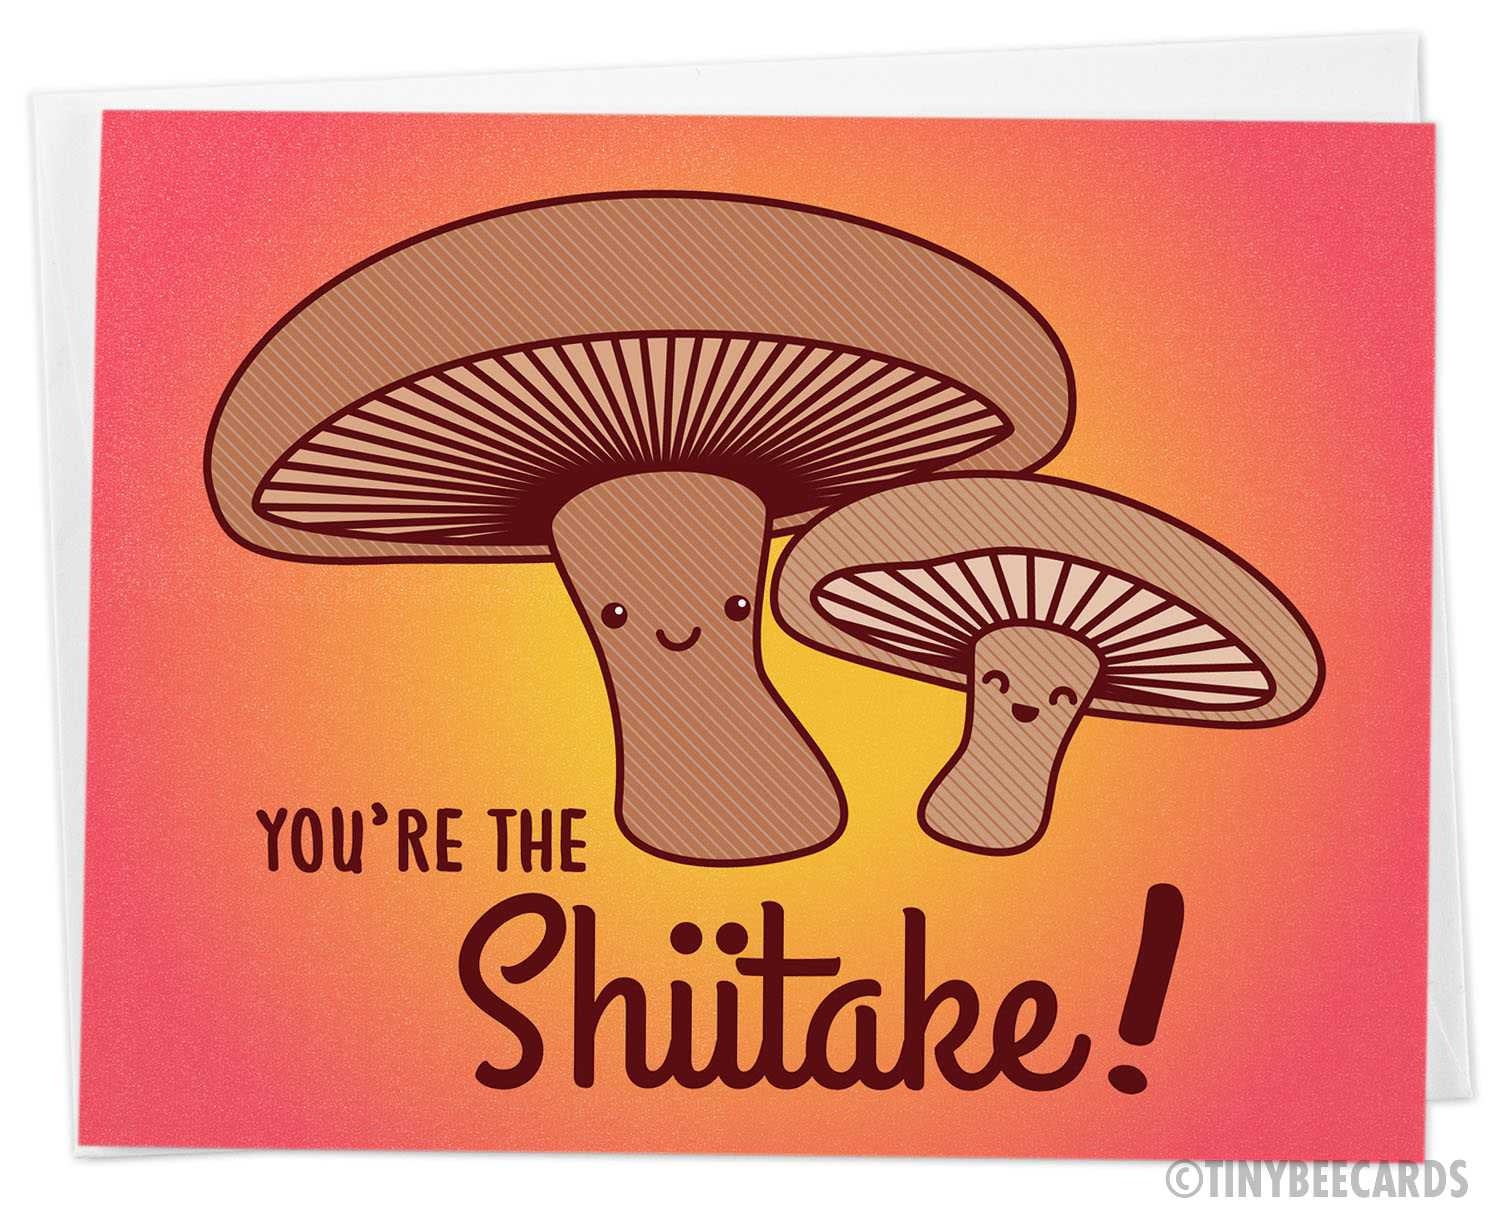 Funny Love card "You're the Shiitake!"